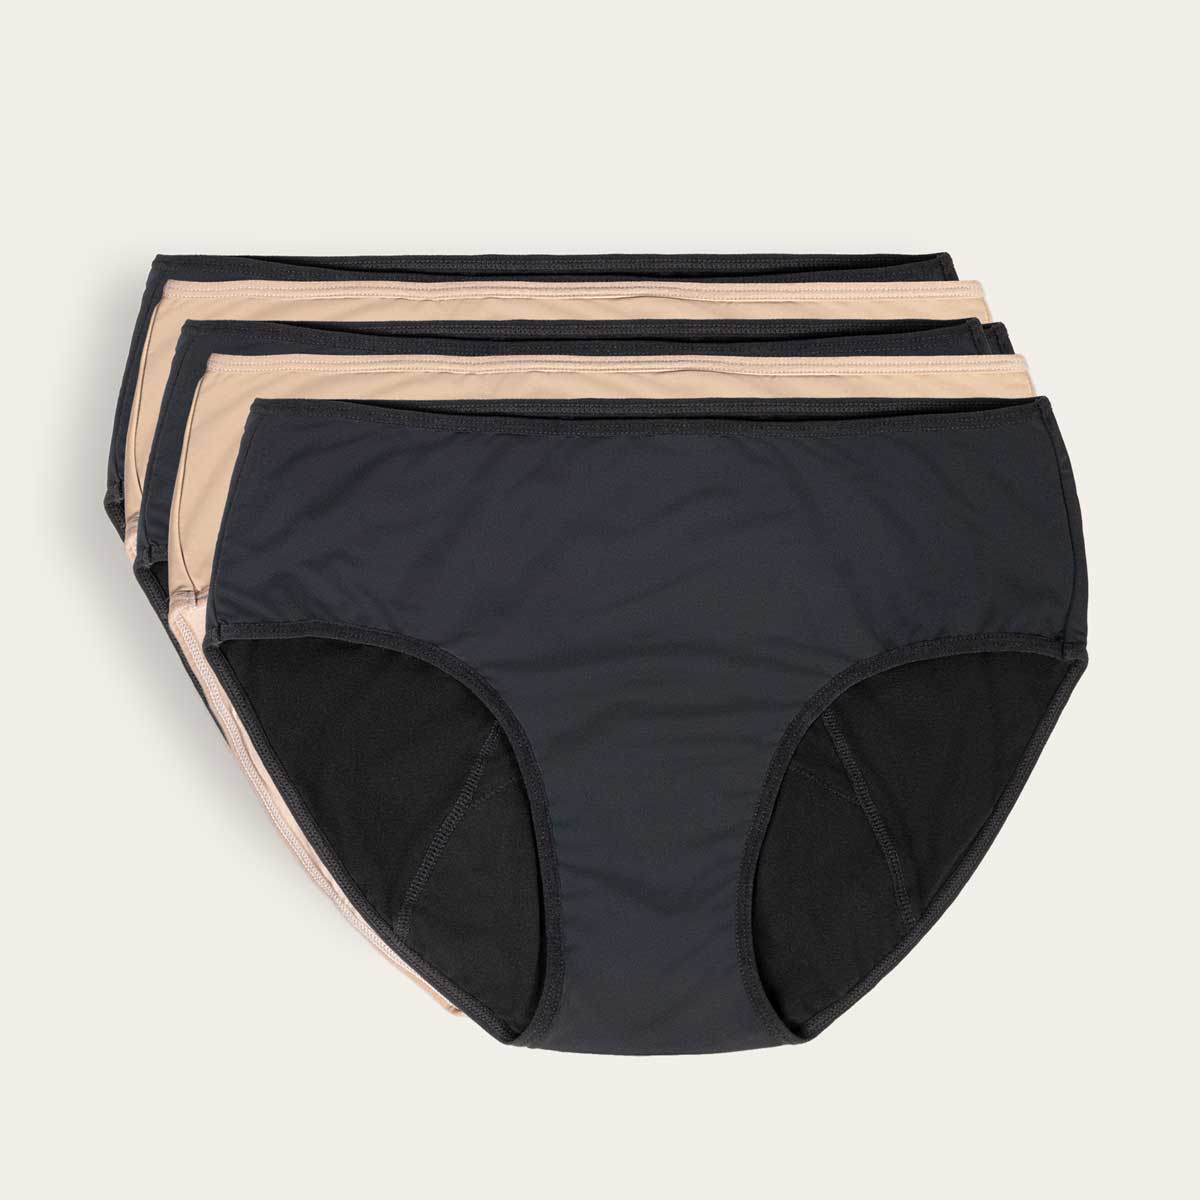 Cotton Panty Liner Leak Proof Period Underwear 5 Pack